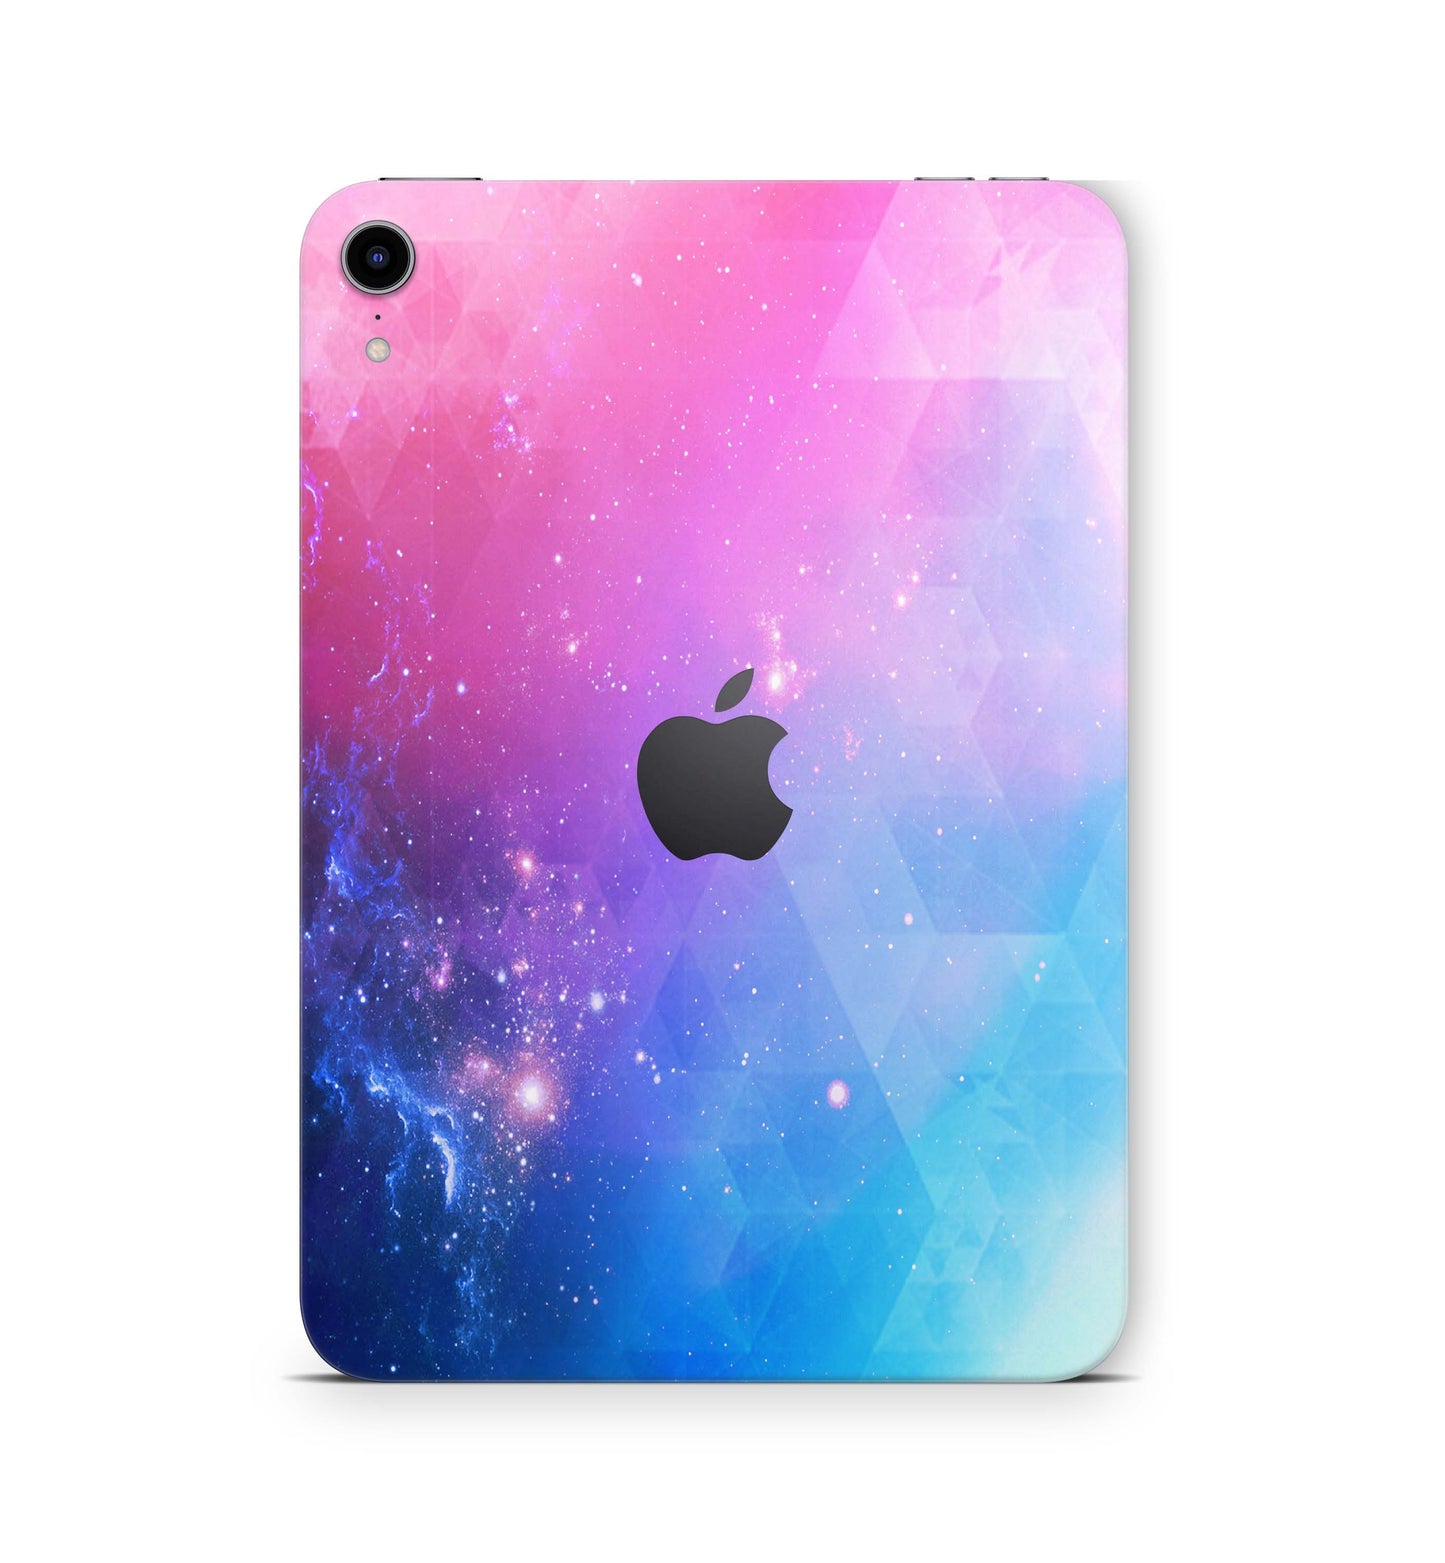 Apple iPad Skin Design Cover Folie Vinyl Skins & Wraps für alle iPad Modelle Aufkleber Skins4u Fantastic  